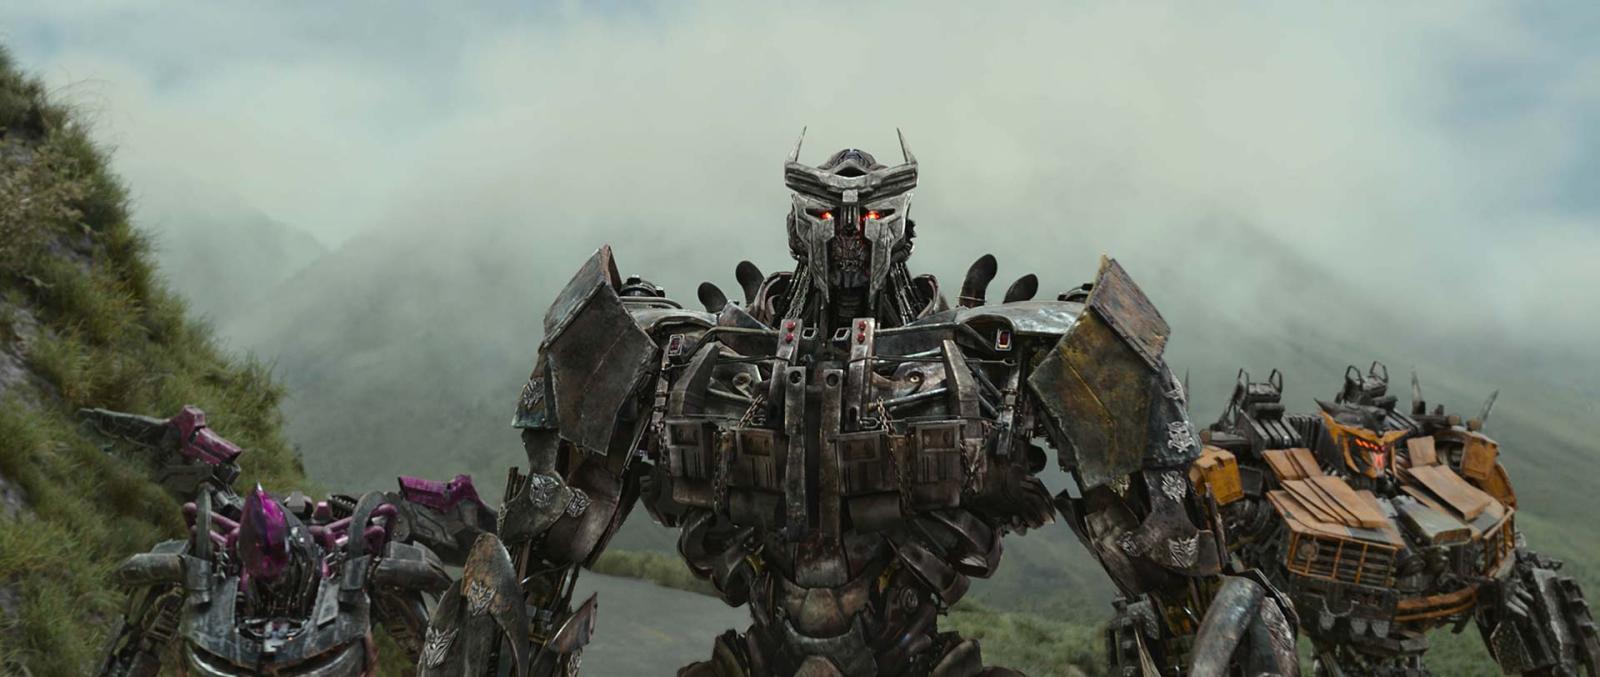 Transformers: Il Risveglio - Steelbook 4K Ultra HD + Blu-ray (Blu-ray) Image 7